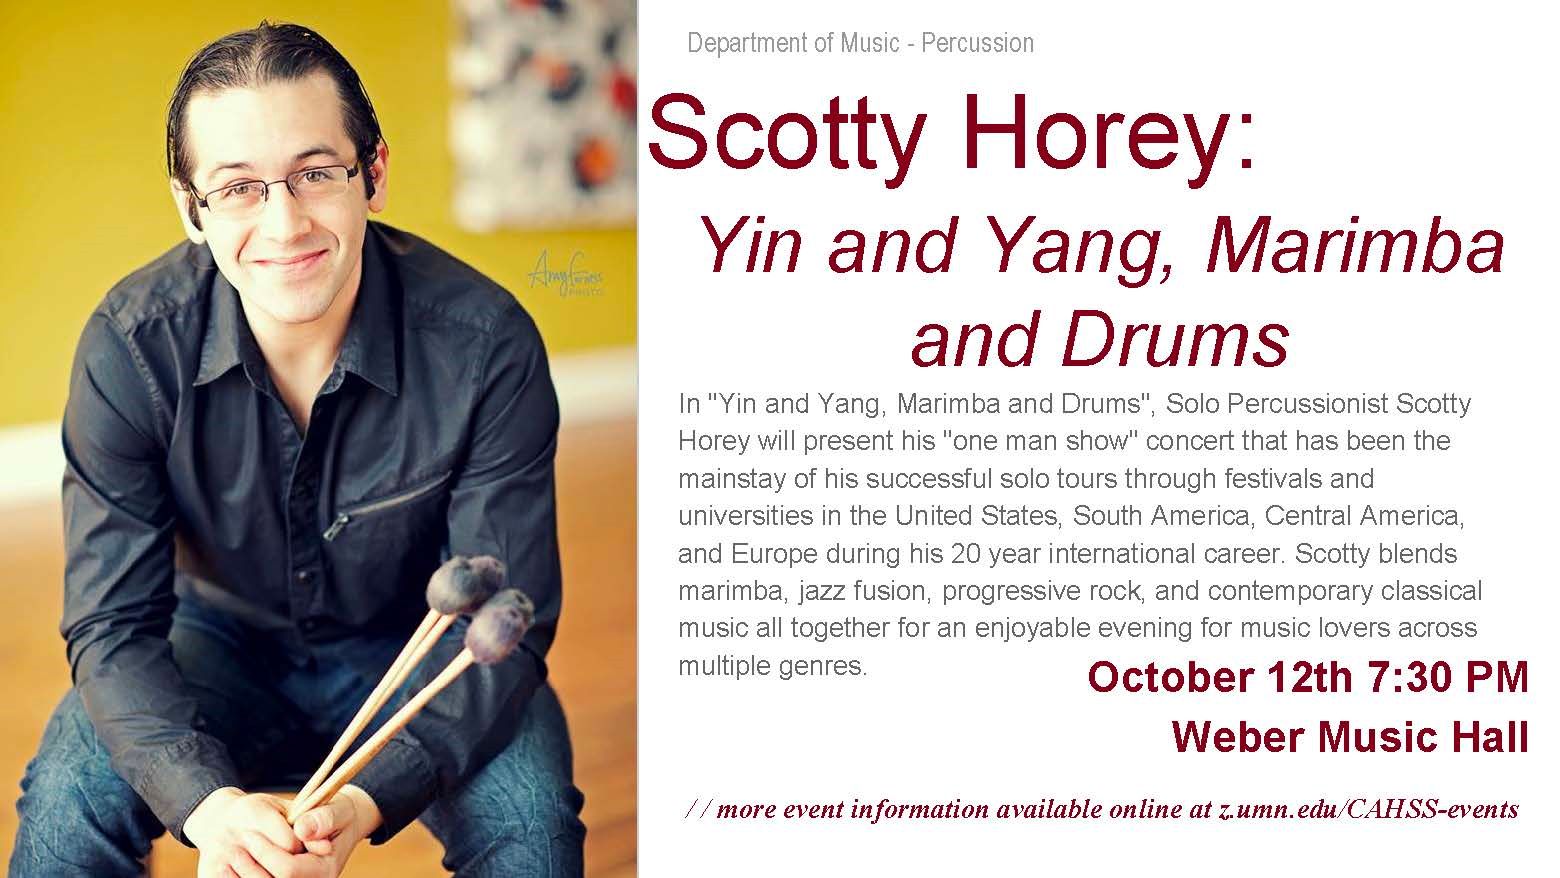 Scotty Horey Percussionist